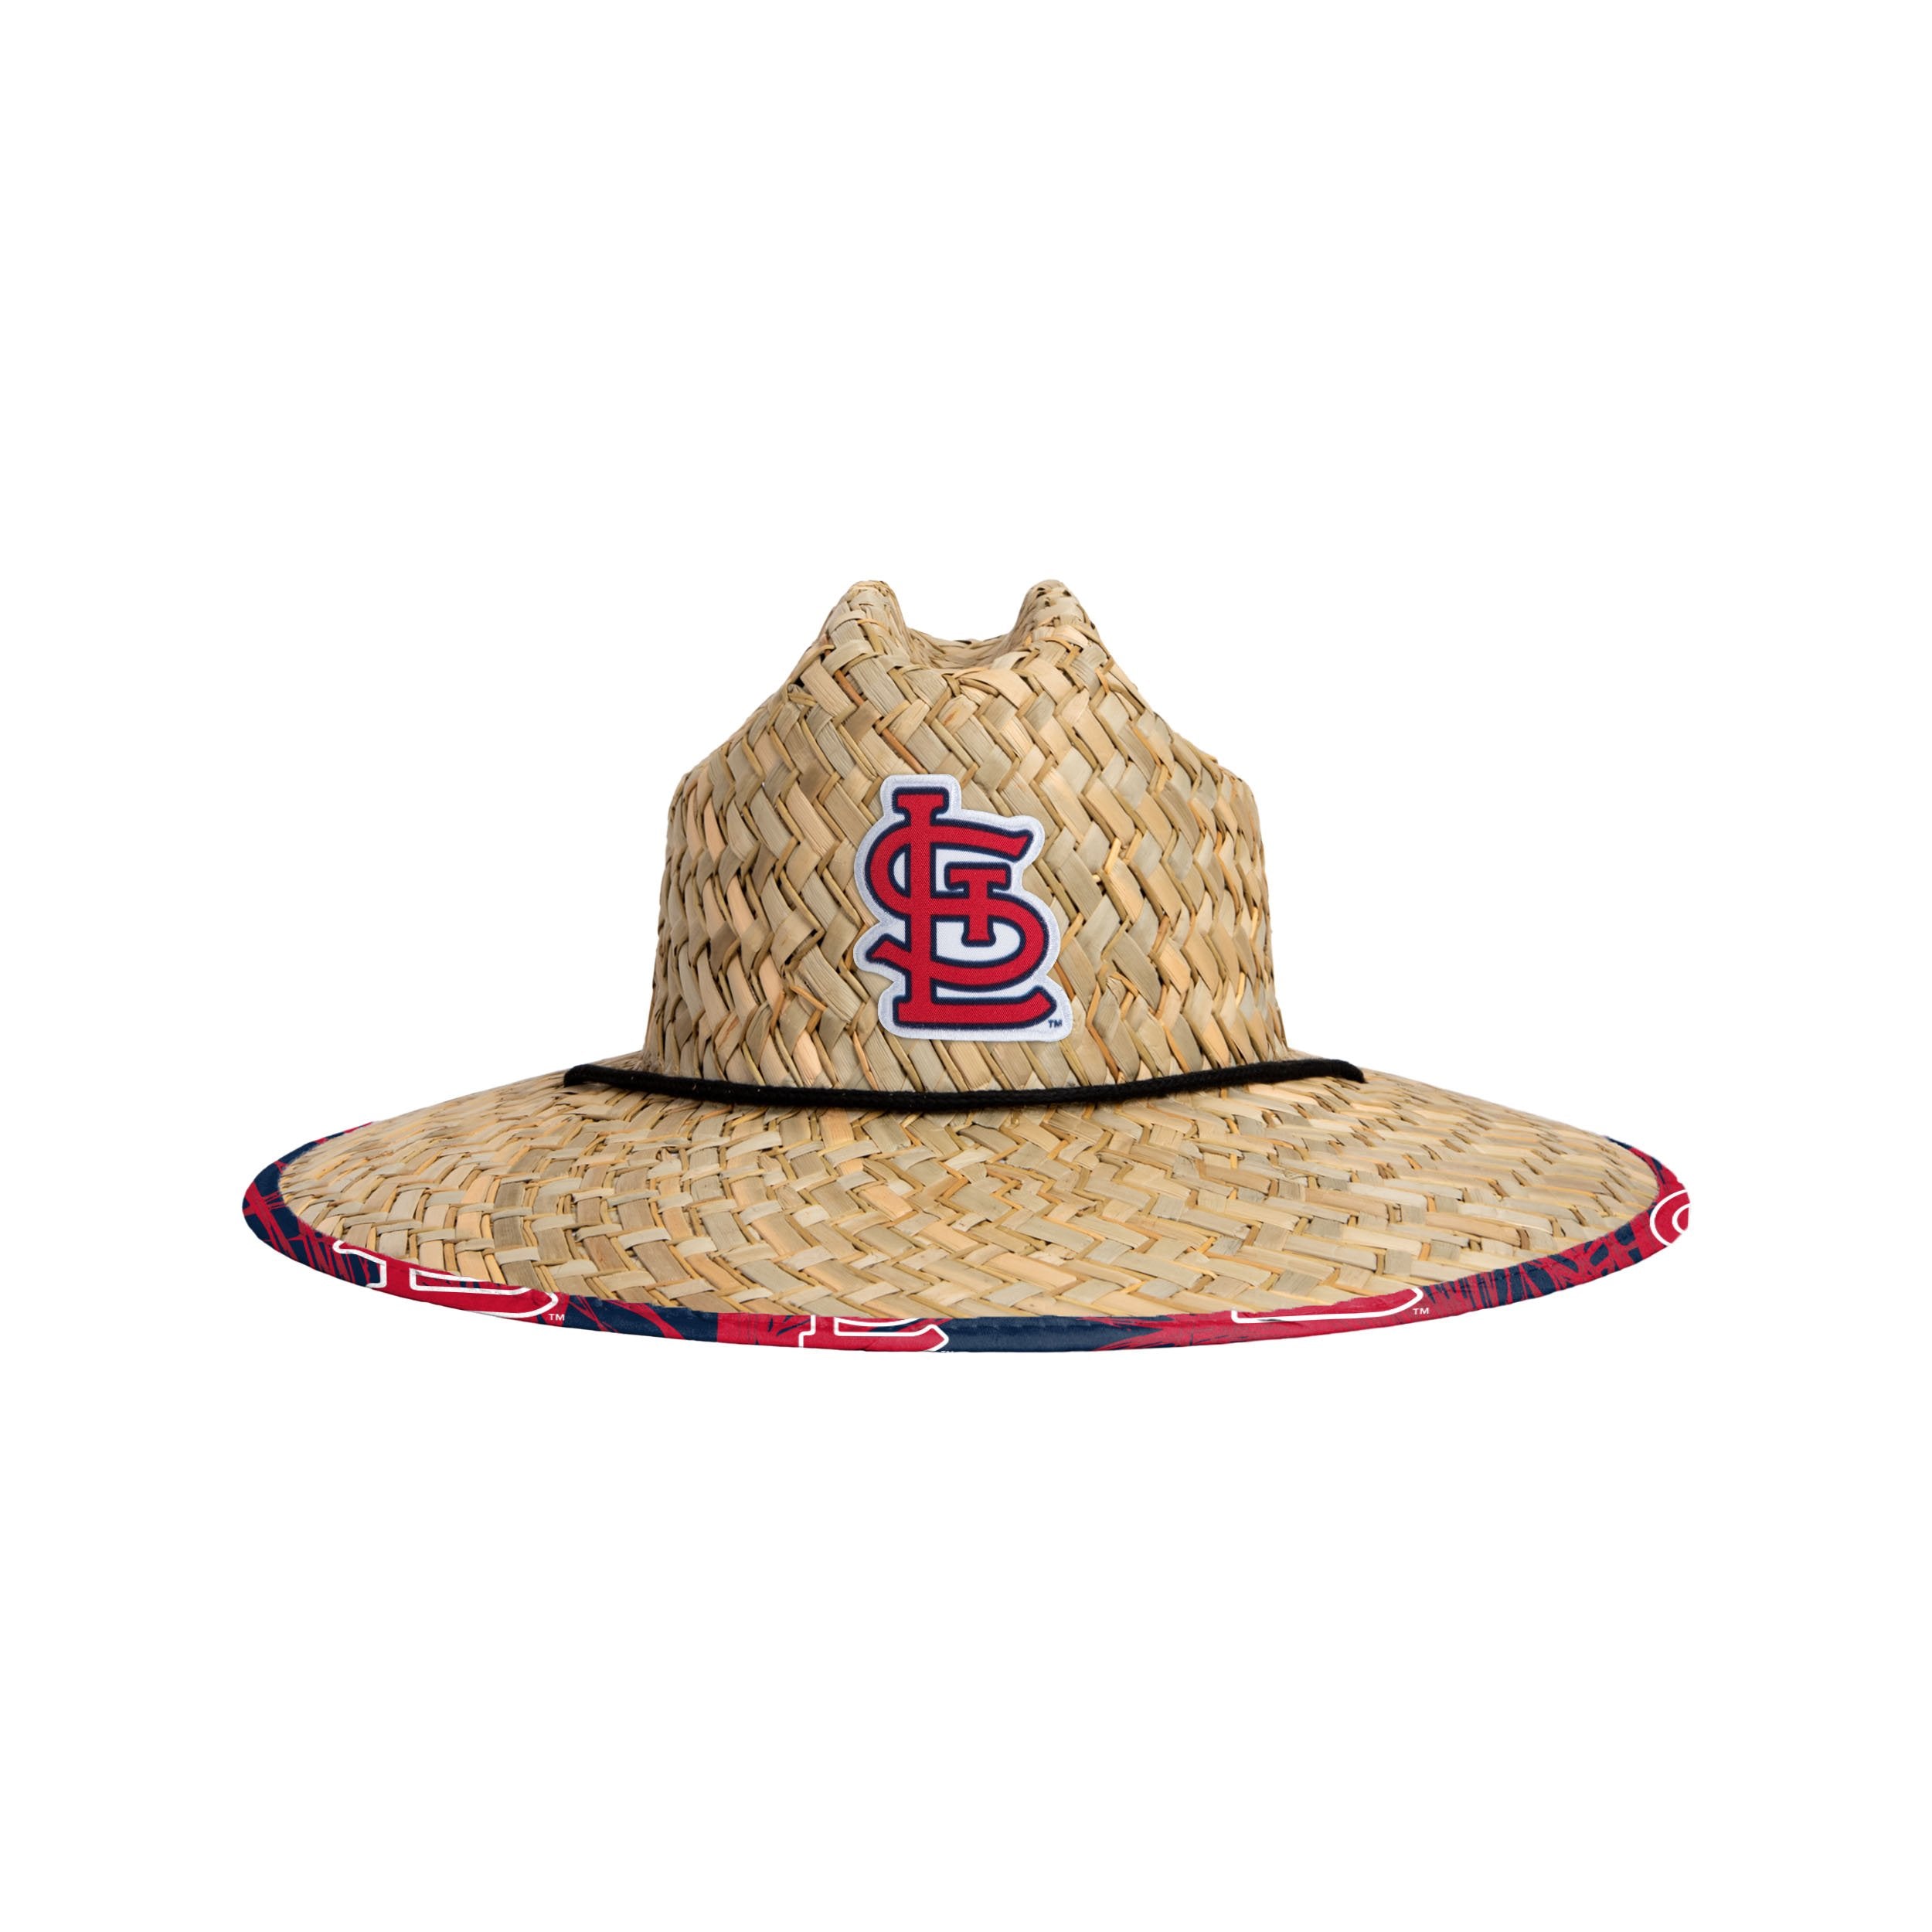 Luffy One Piece Straw Hat St.Louis Cardinals Baseball Jersey - Pullama